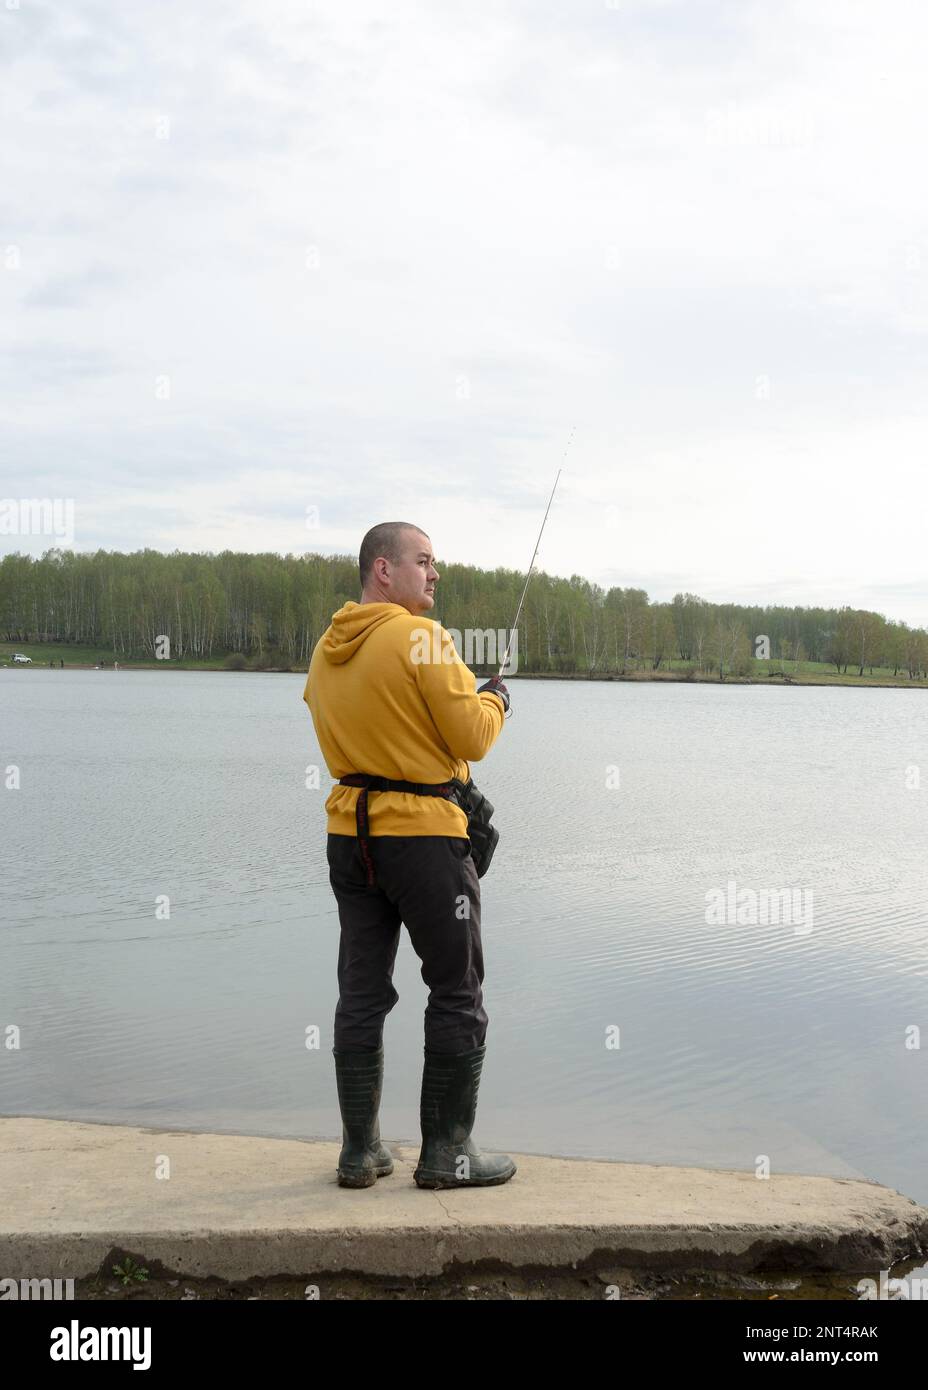 https://c8.alamy.com/comp/2NT4RAK/russian-modern-male-fisherman-fishes-on-an-ultralight-spinning-rod-in-the-rain-on-a-lake-in-siberia-2NT4RAK.jpg